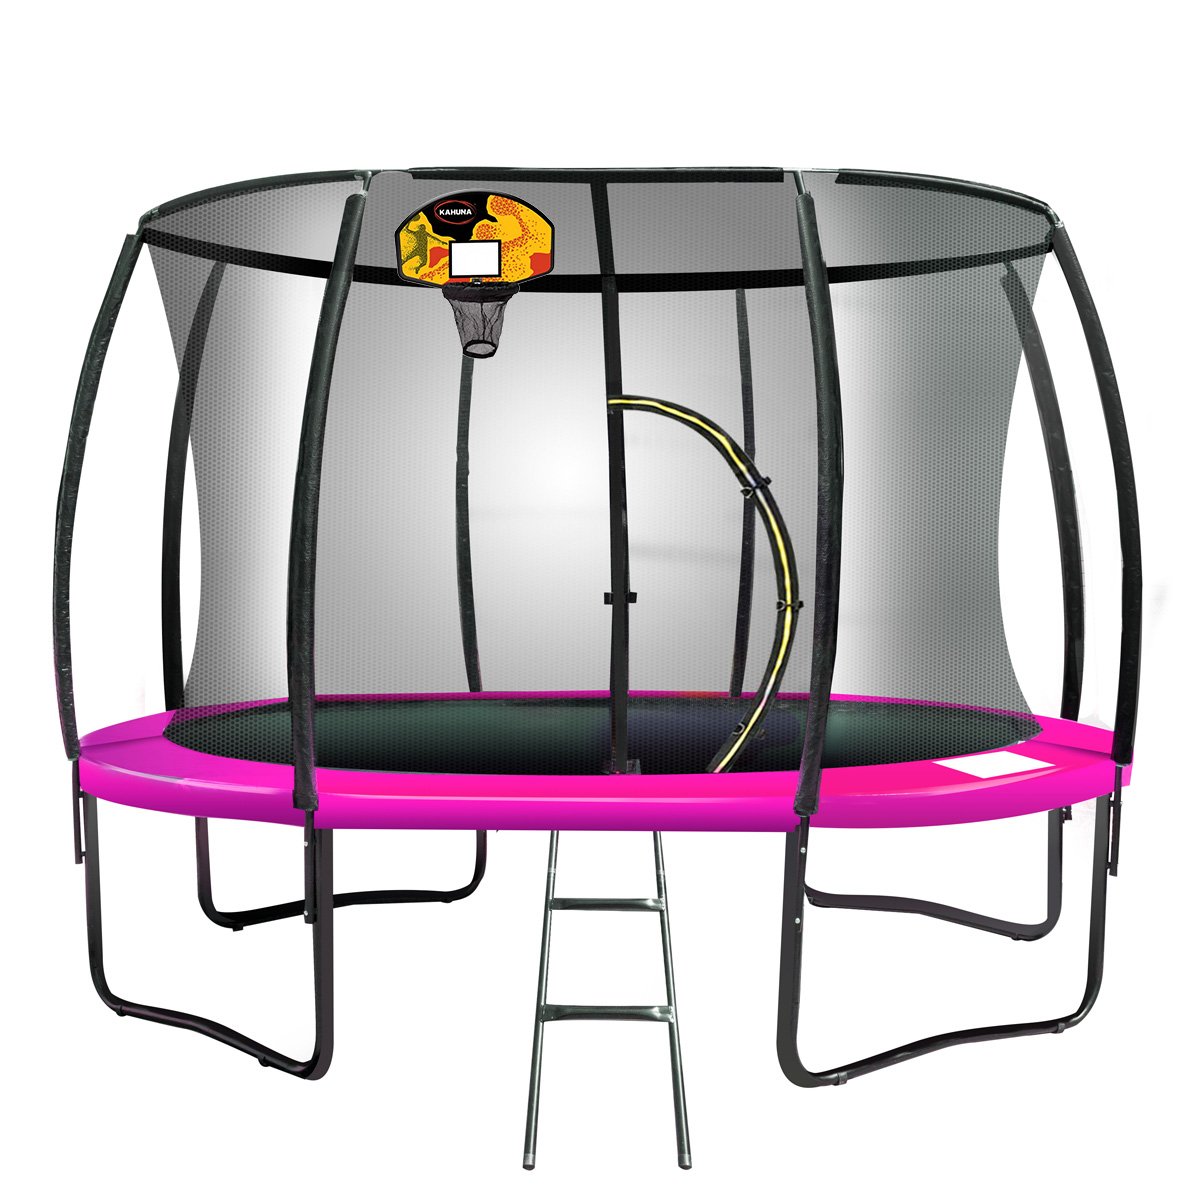 Kahuna 8ft Outdoor Trampoline Kids Children With Safety Enclosure Mat Pad Net Ladder Basketball Hoop Set - Pink - SILBERSHELL